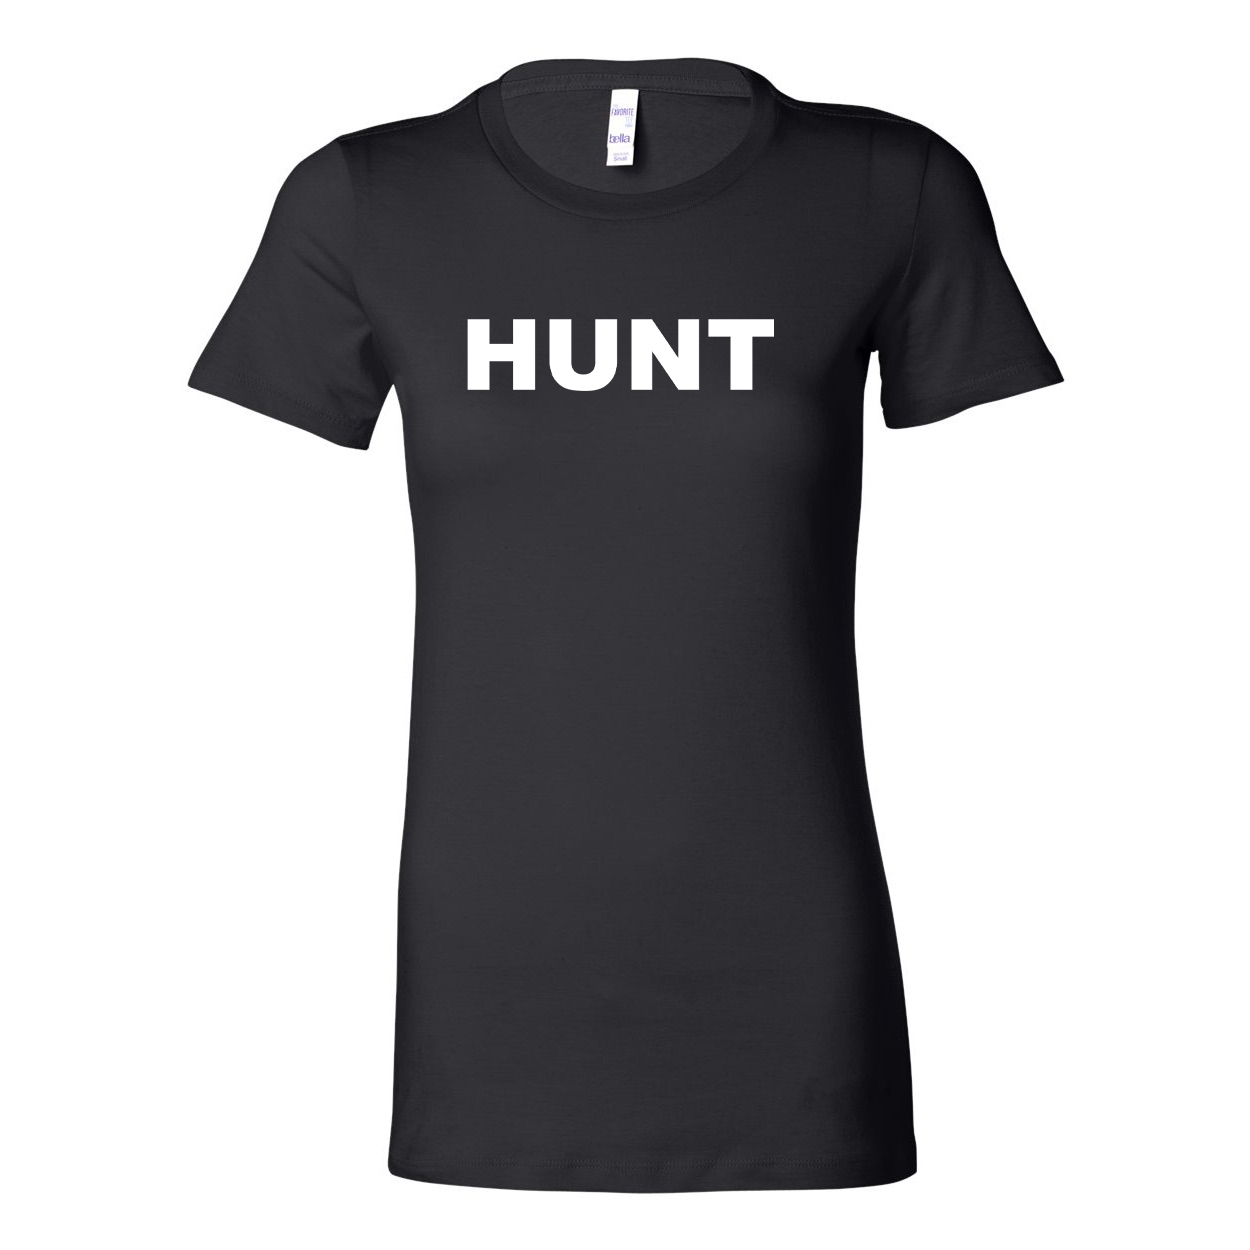 Hunt Brand Logo Classic Women's Fitted Tri-Blend T-Shirt Black (White Logo)